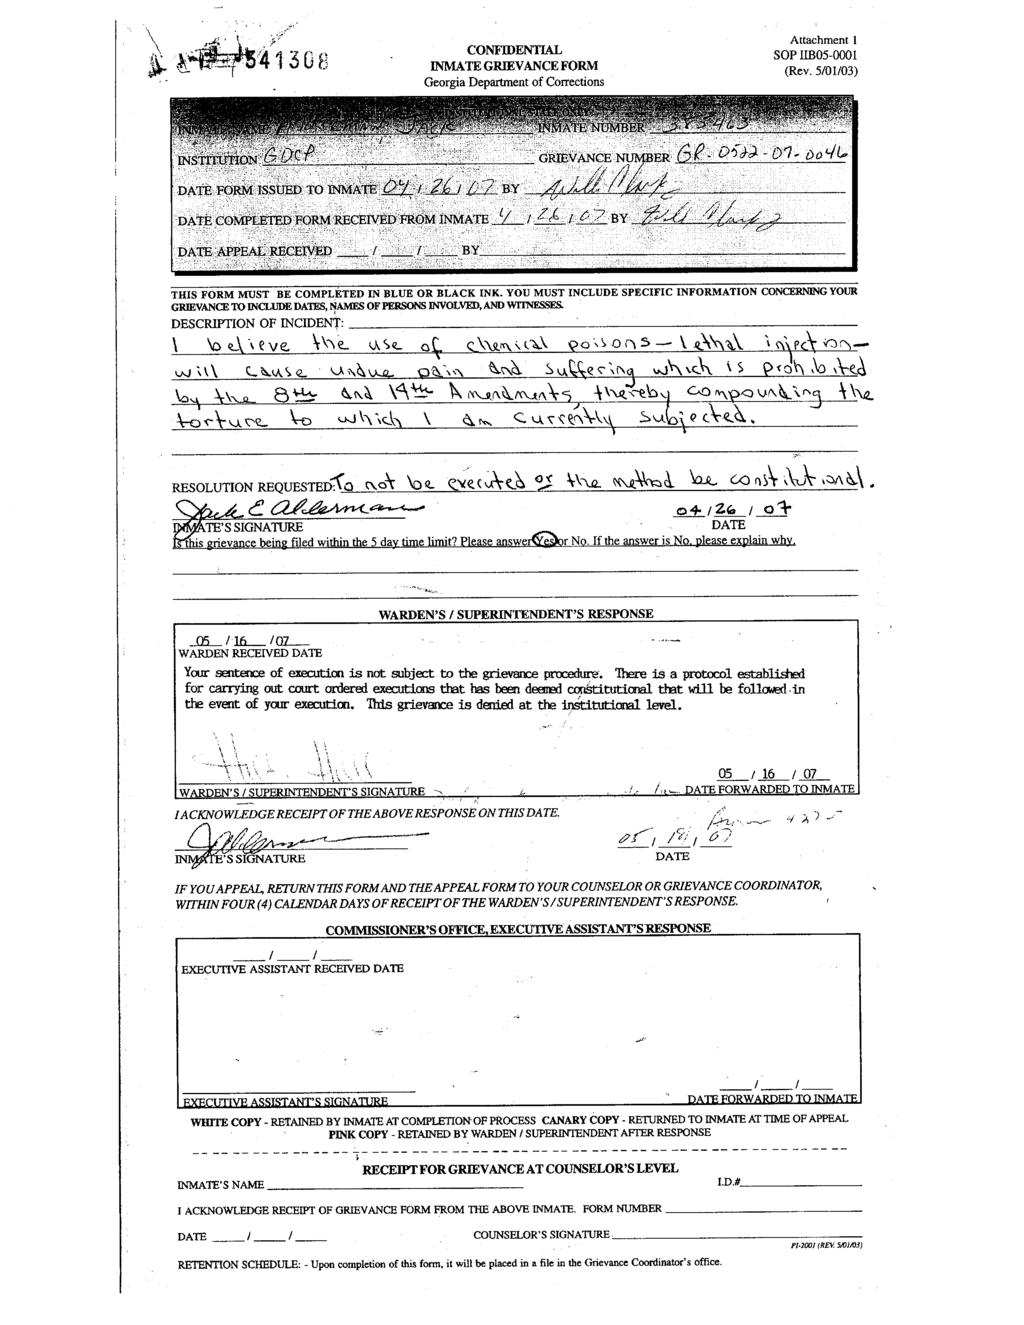 Case 1:07-cv-00896-BBM Document